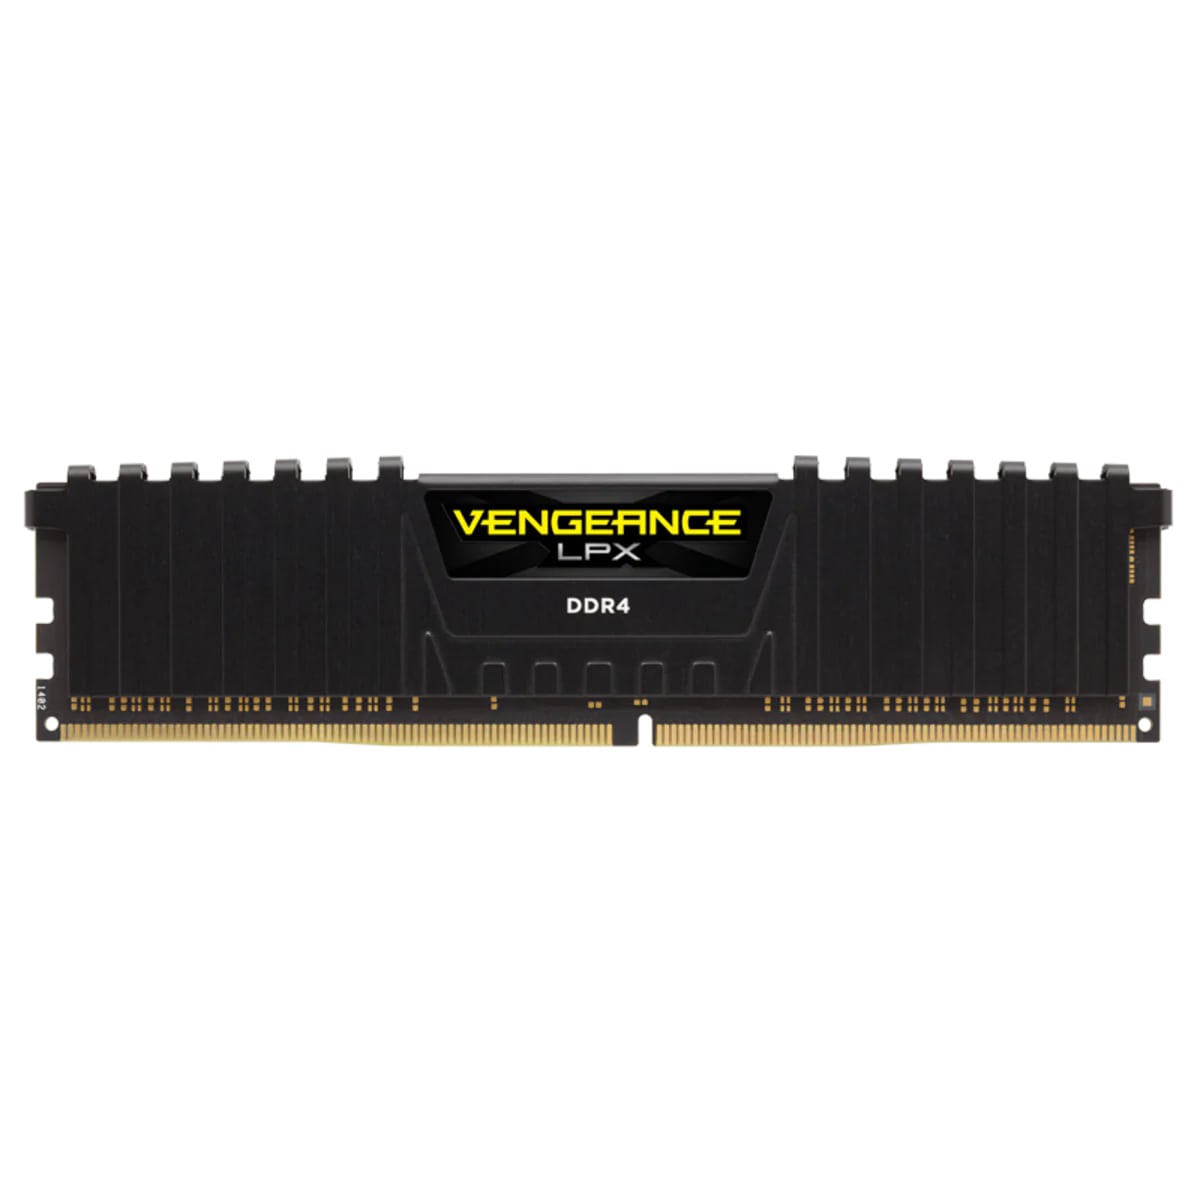 RAM CORSAIR VENGEANCE LPX 16GB DDR4 2400MHz - CMK16GX4M1A2400C14